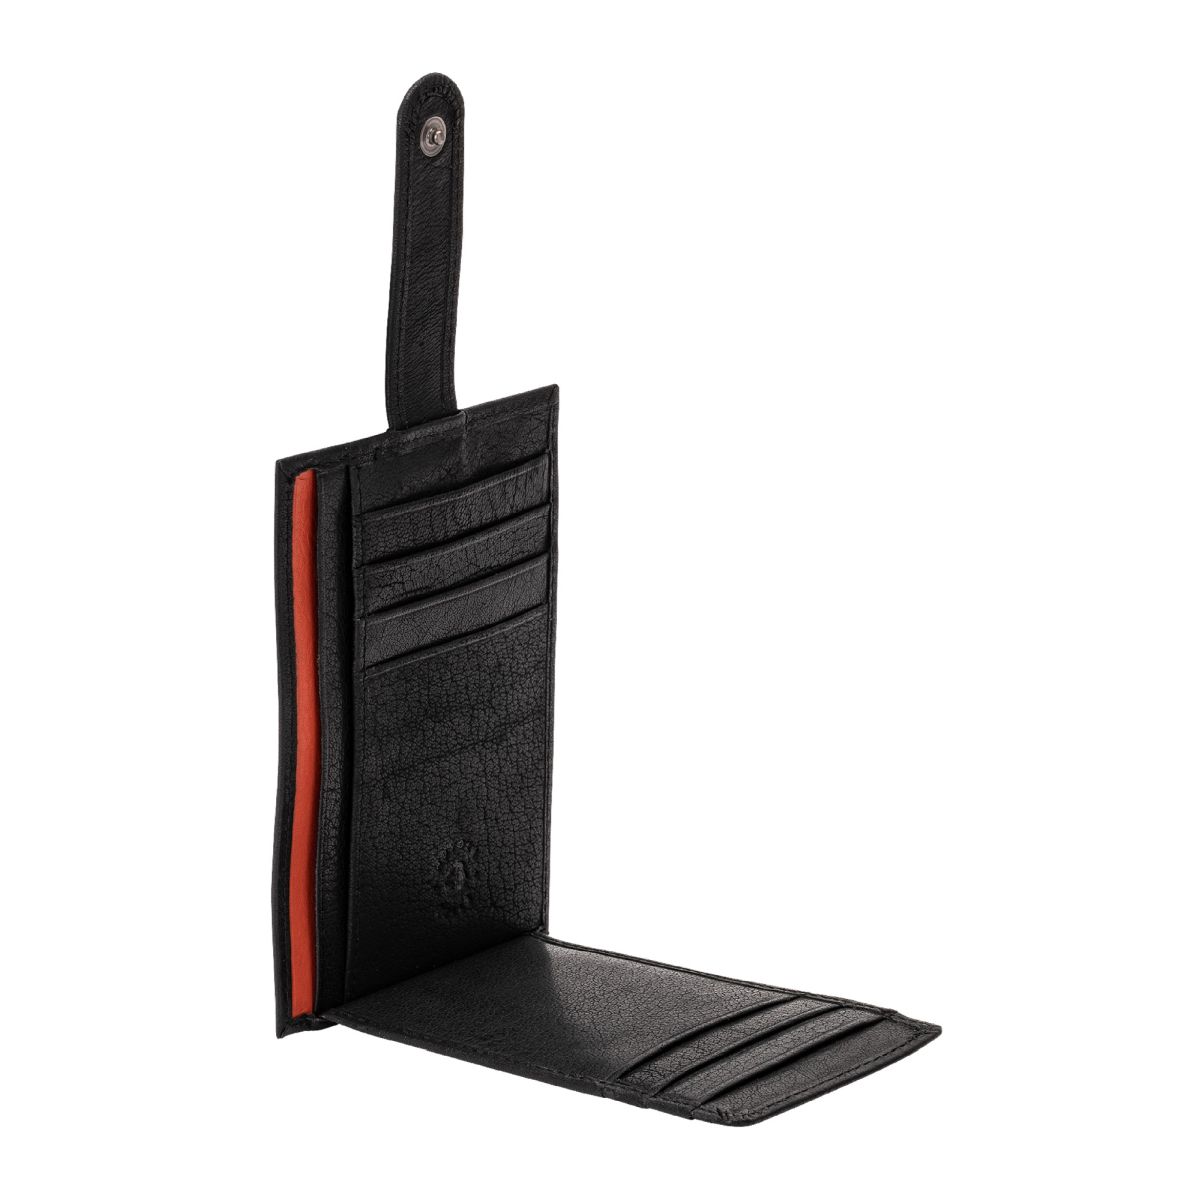 NUVOLA PELLE Compact multi color credit card holder wallet - Black